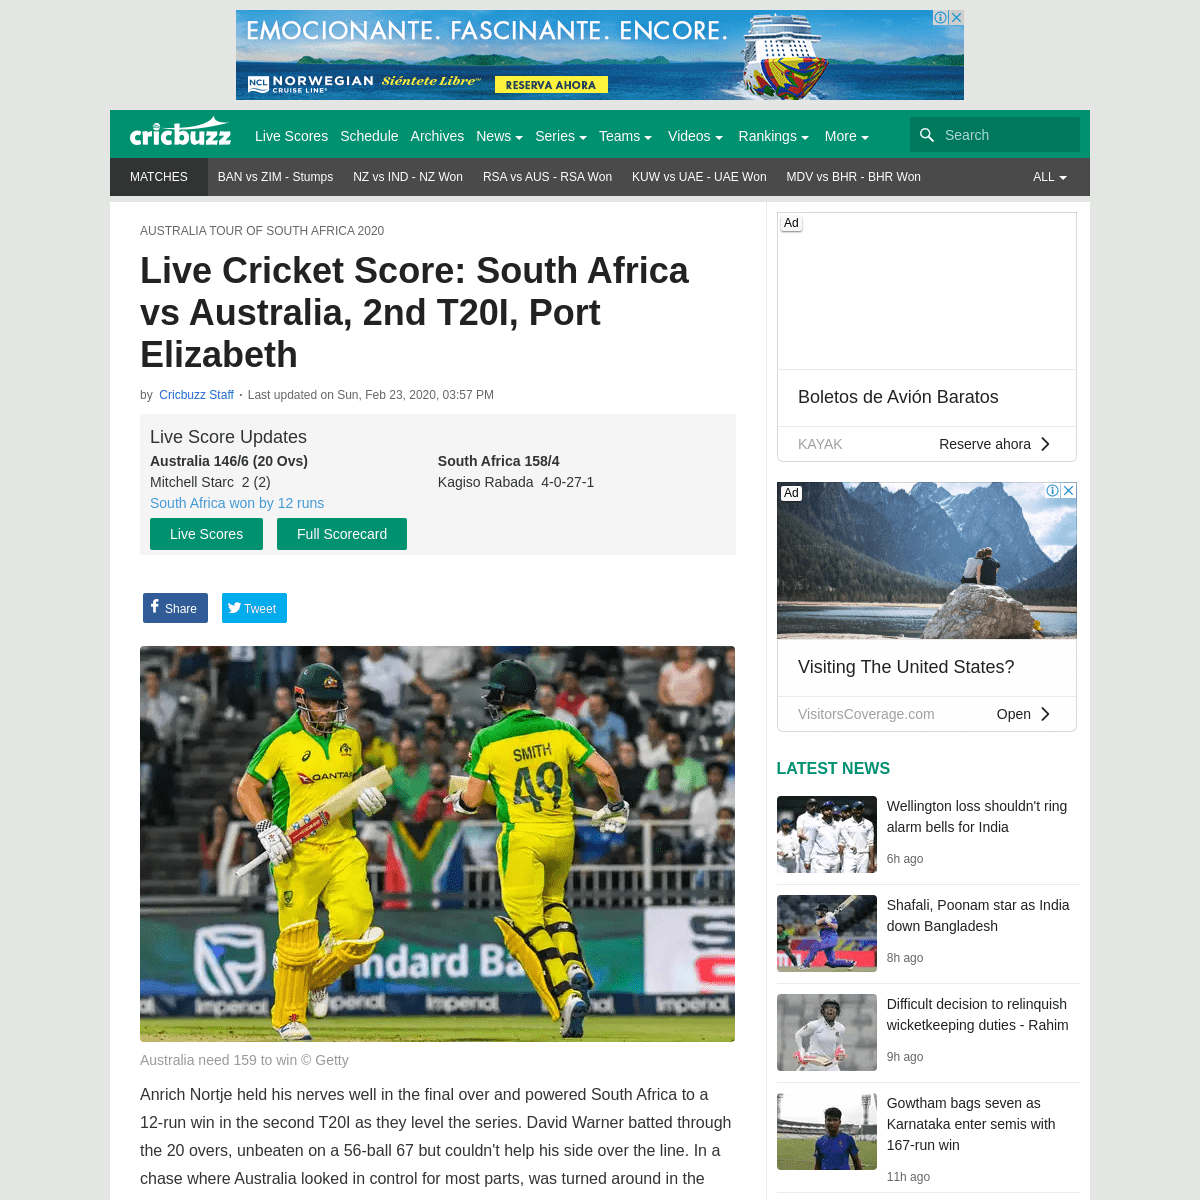 A complete backup of www.cricbuzz.com/cricket-news/112405/live-cricket-score-south-africa-vs-australia-2nd-t20i-port-elizabeth